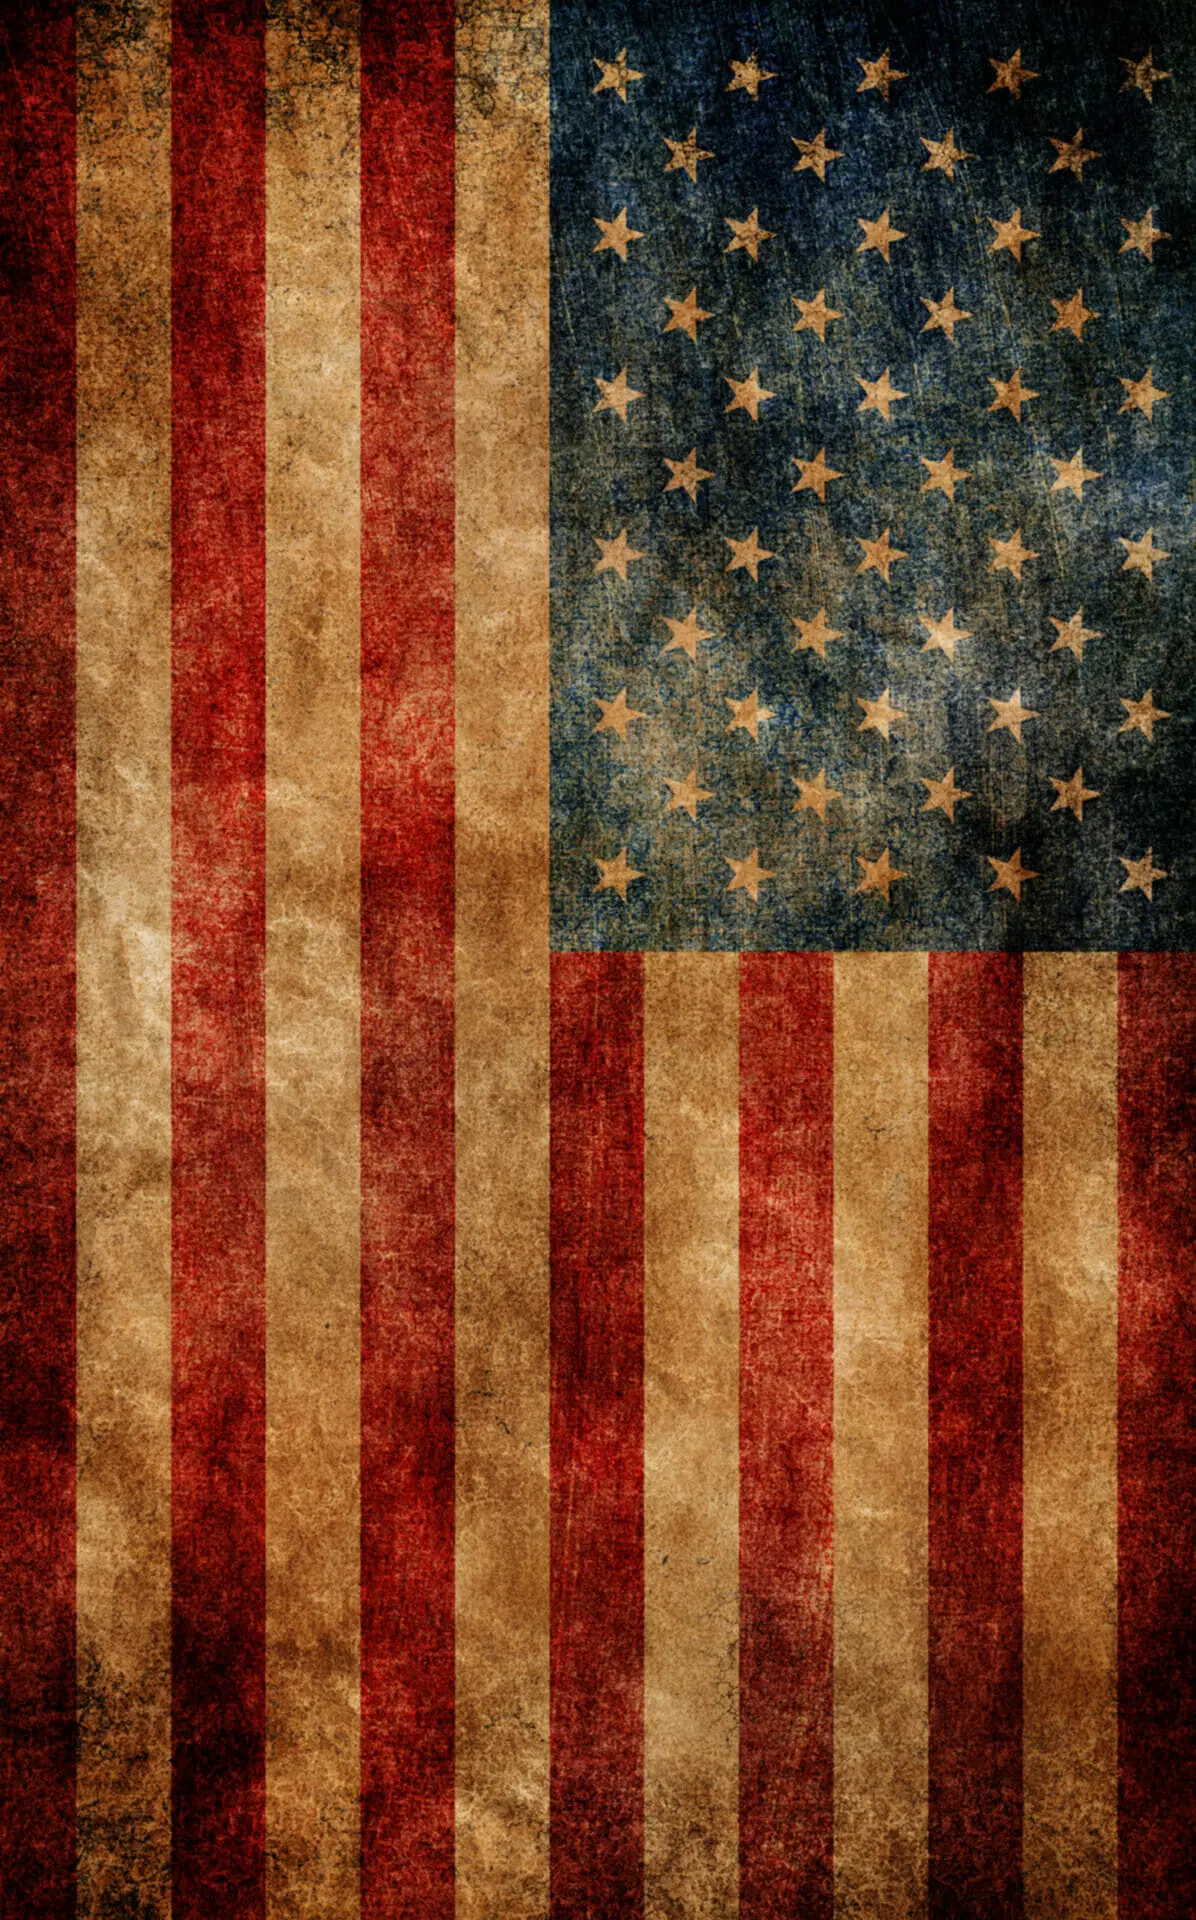 4-Piece Rustic American Flag Wall Art | Country Door